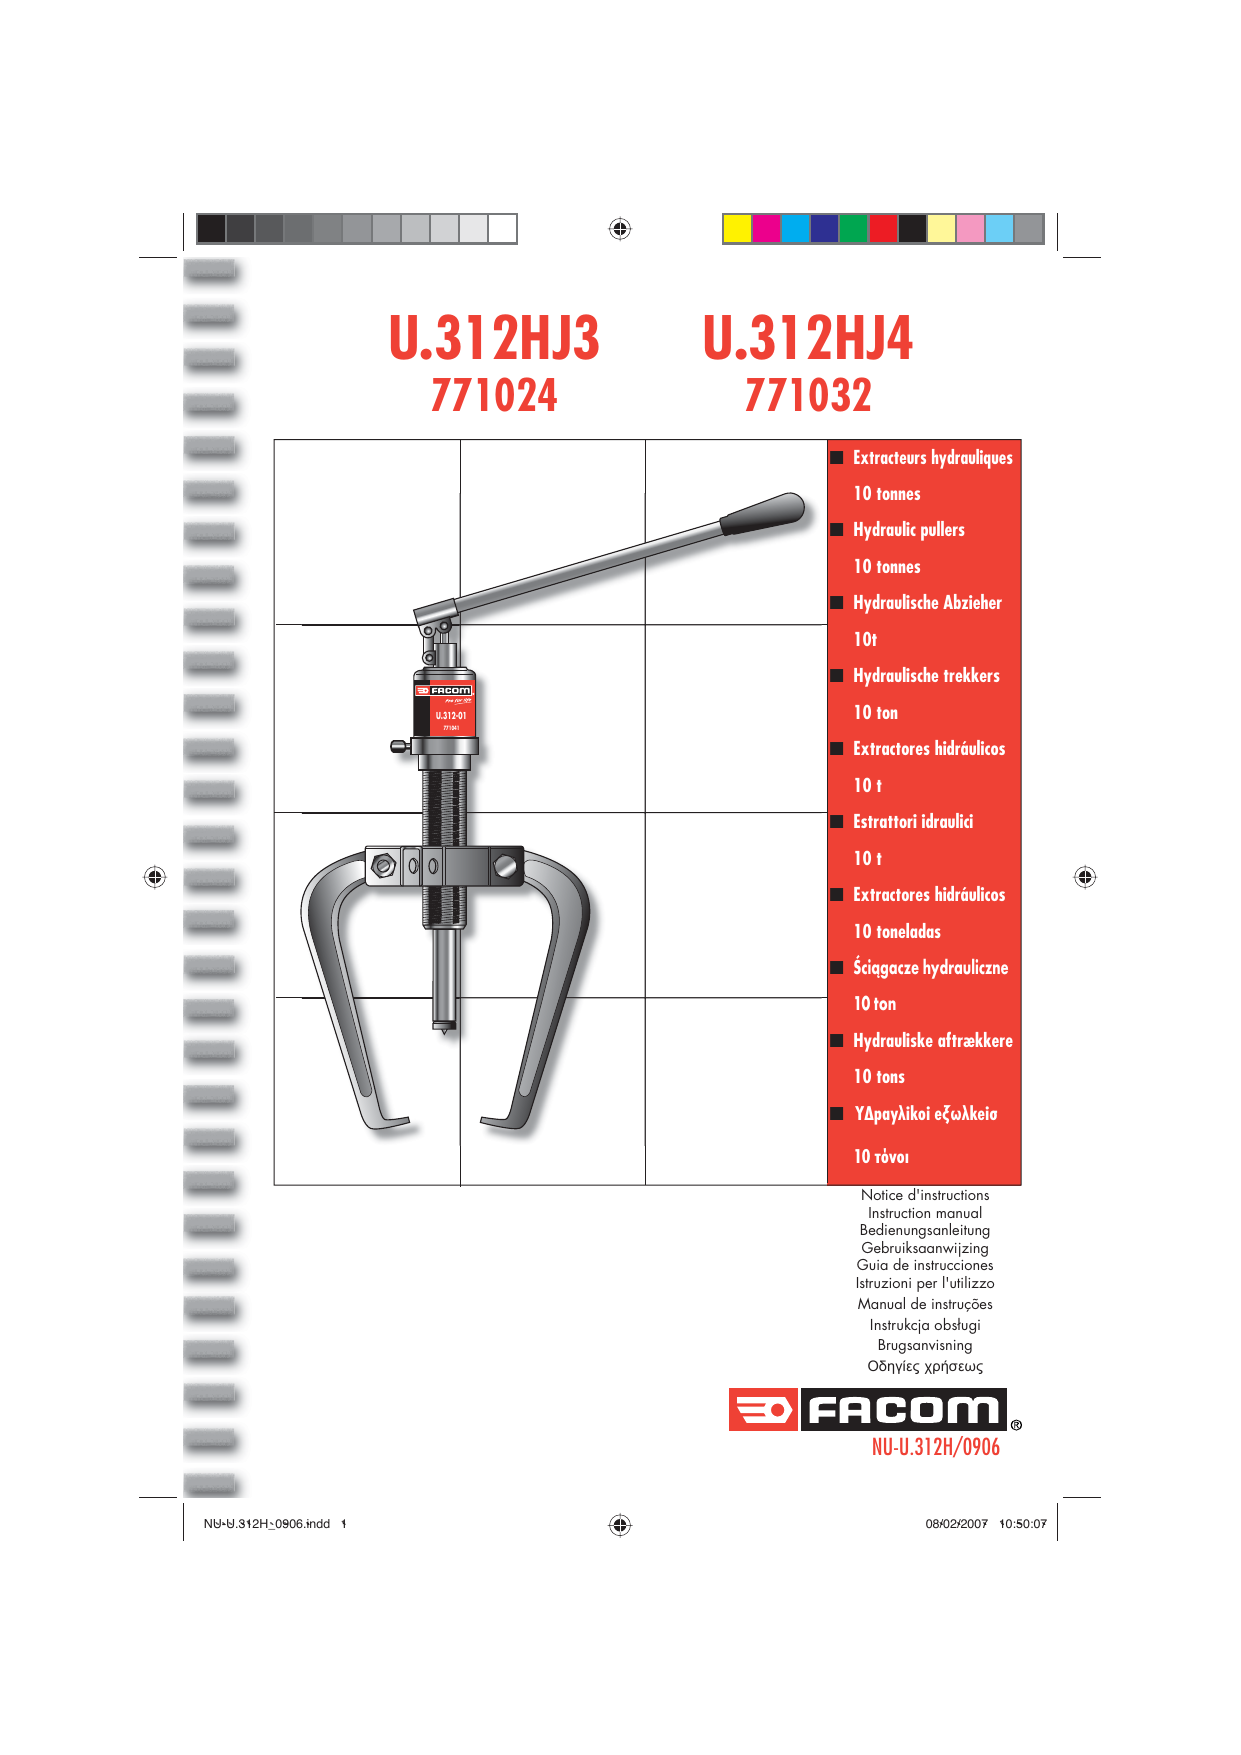 Facom U 312hj3 Hydraulic Puller Instruction Manual Manualzz